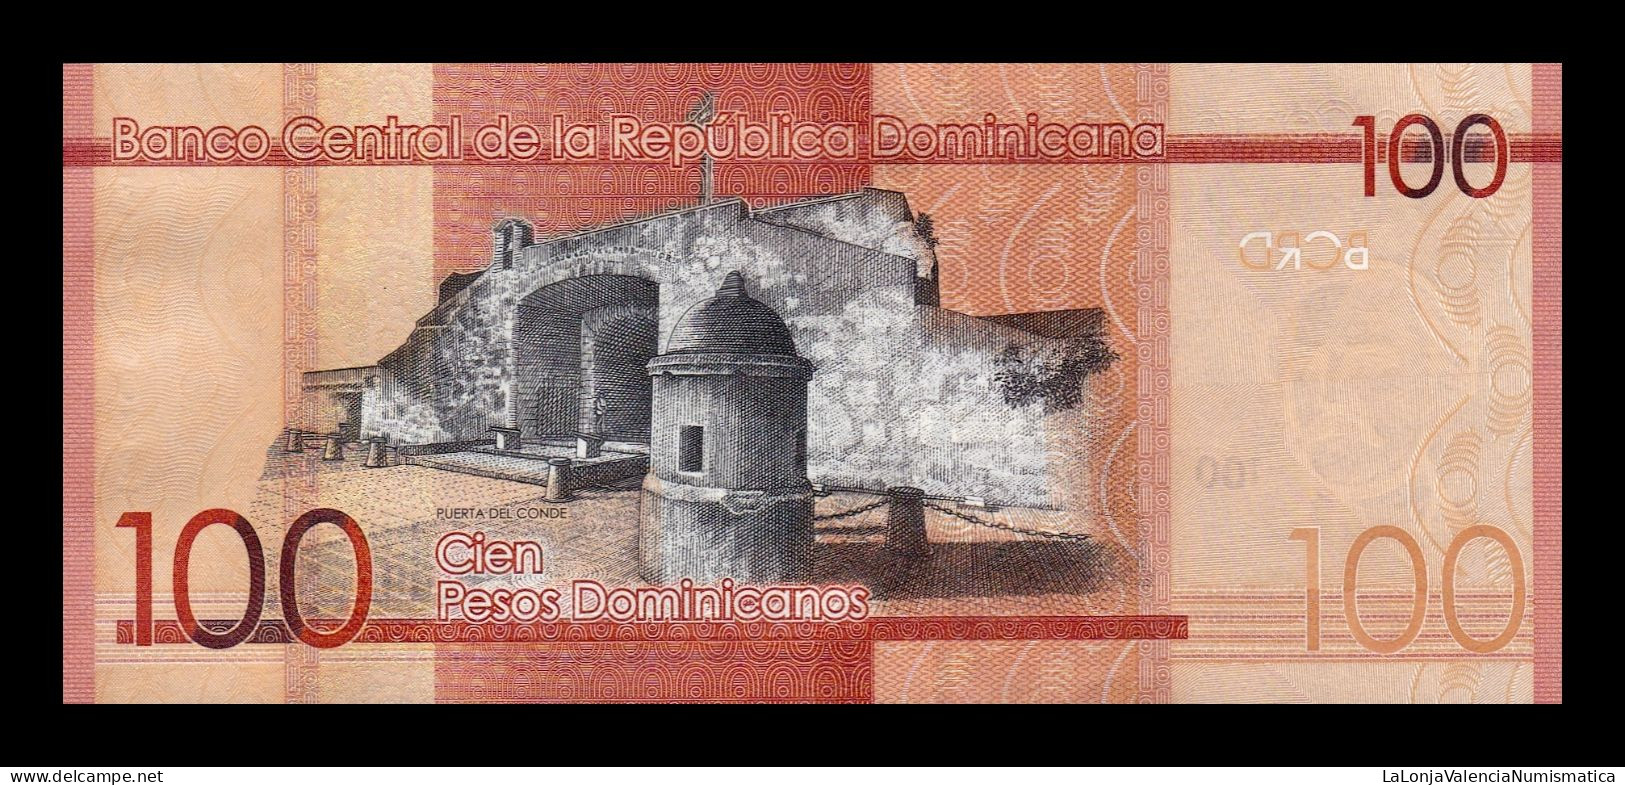 República Dominicana 100 Pesos Dominicanos 2016 Pick 190c Low Serial 993 Sc Unc - Dominicana